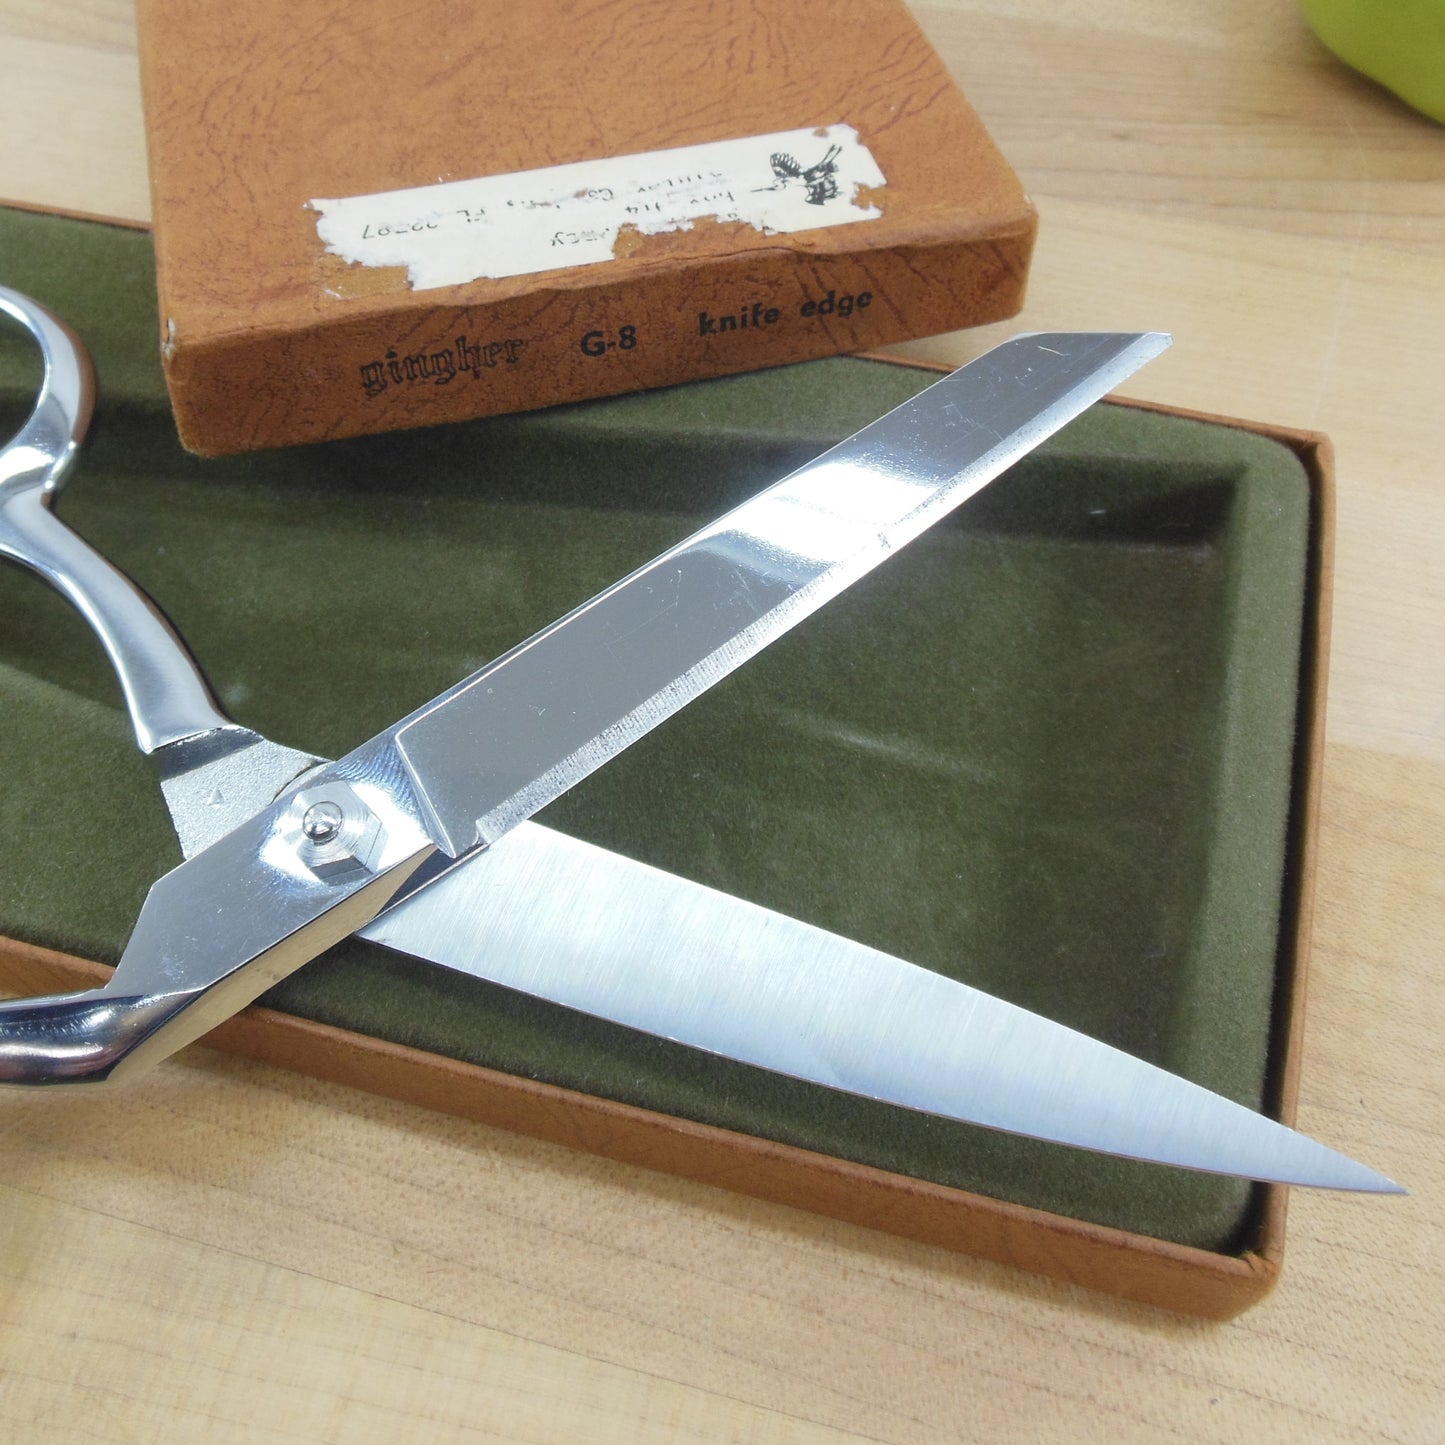 Gingher G-8 Knife Edge Scissors Shears In Box used